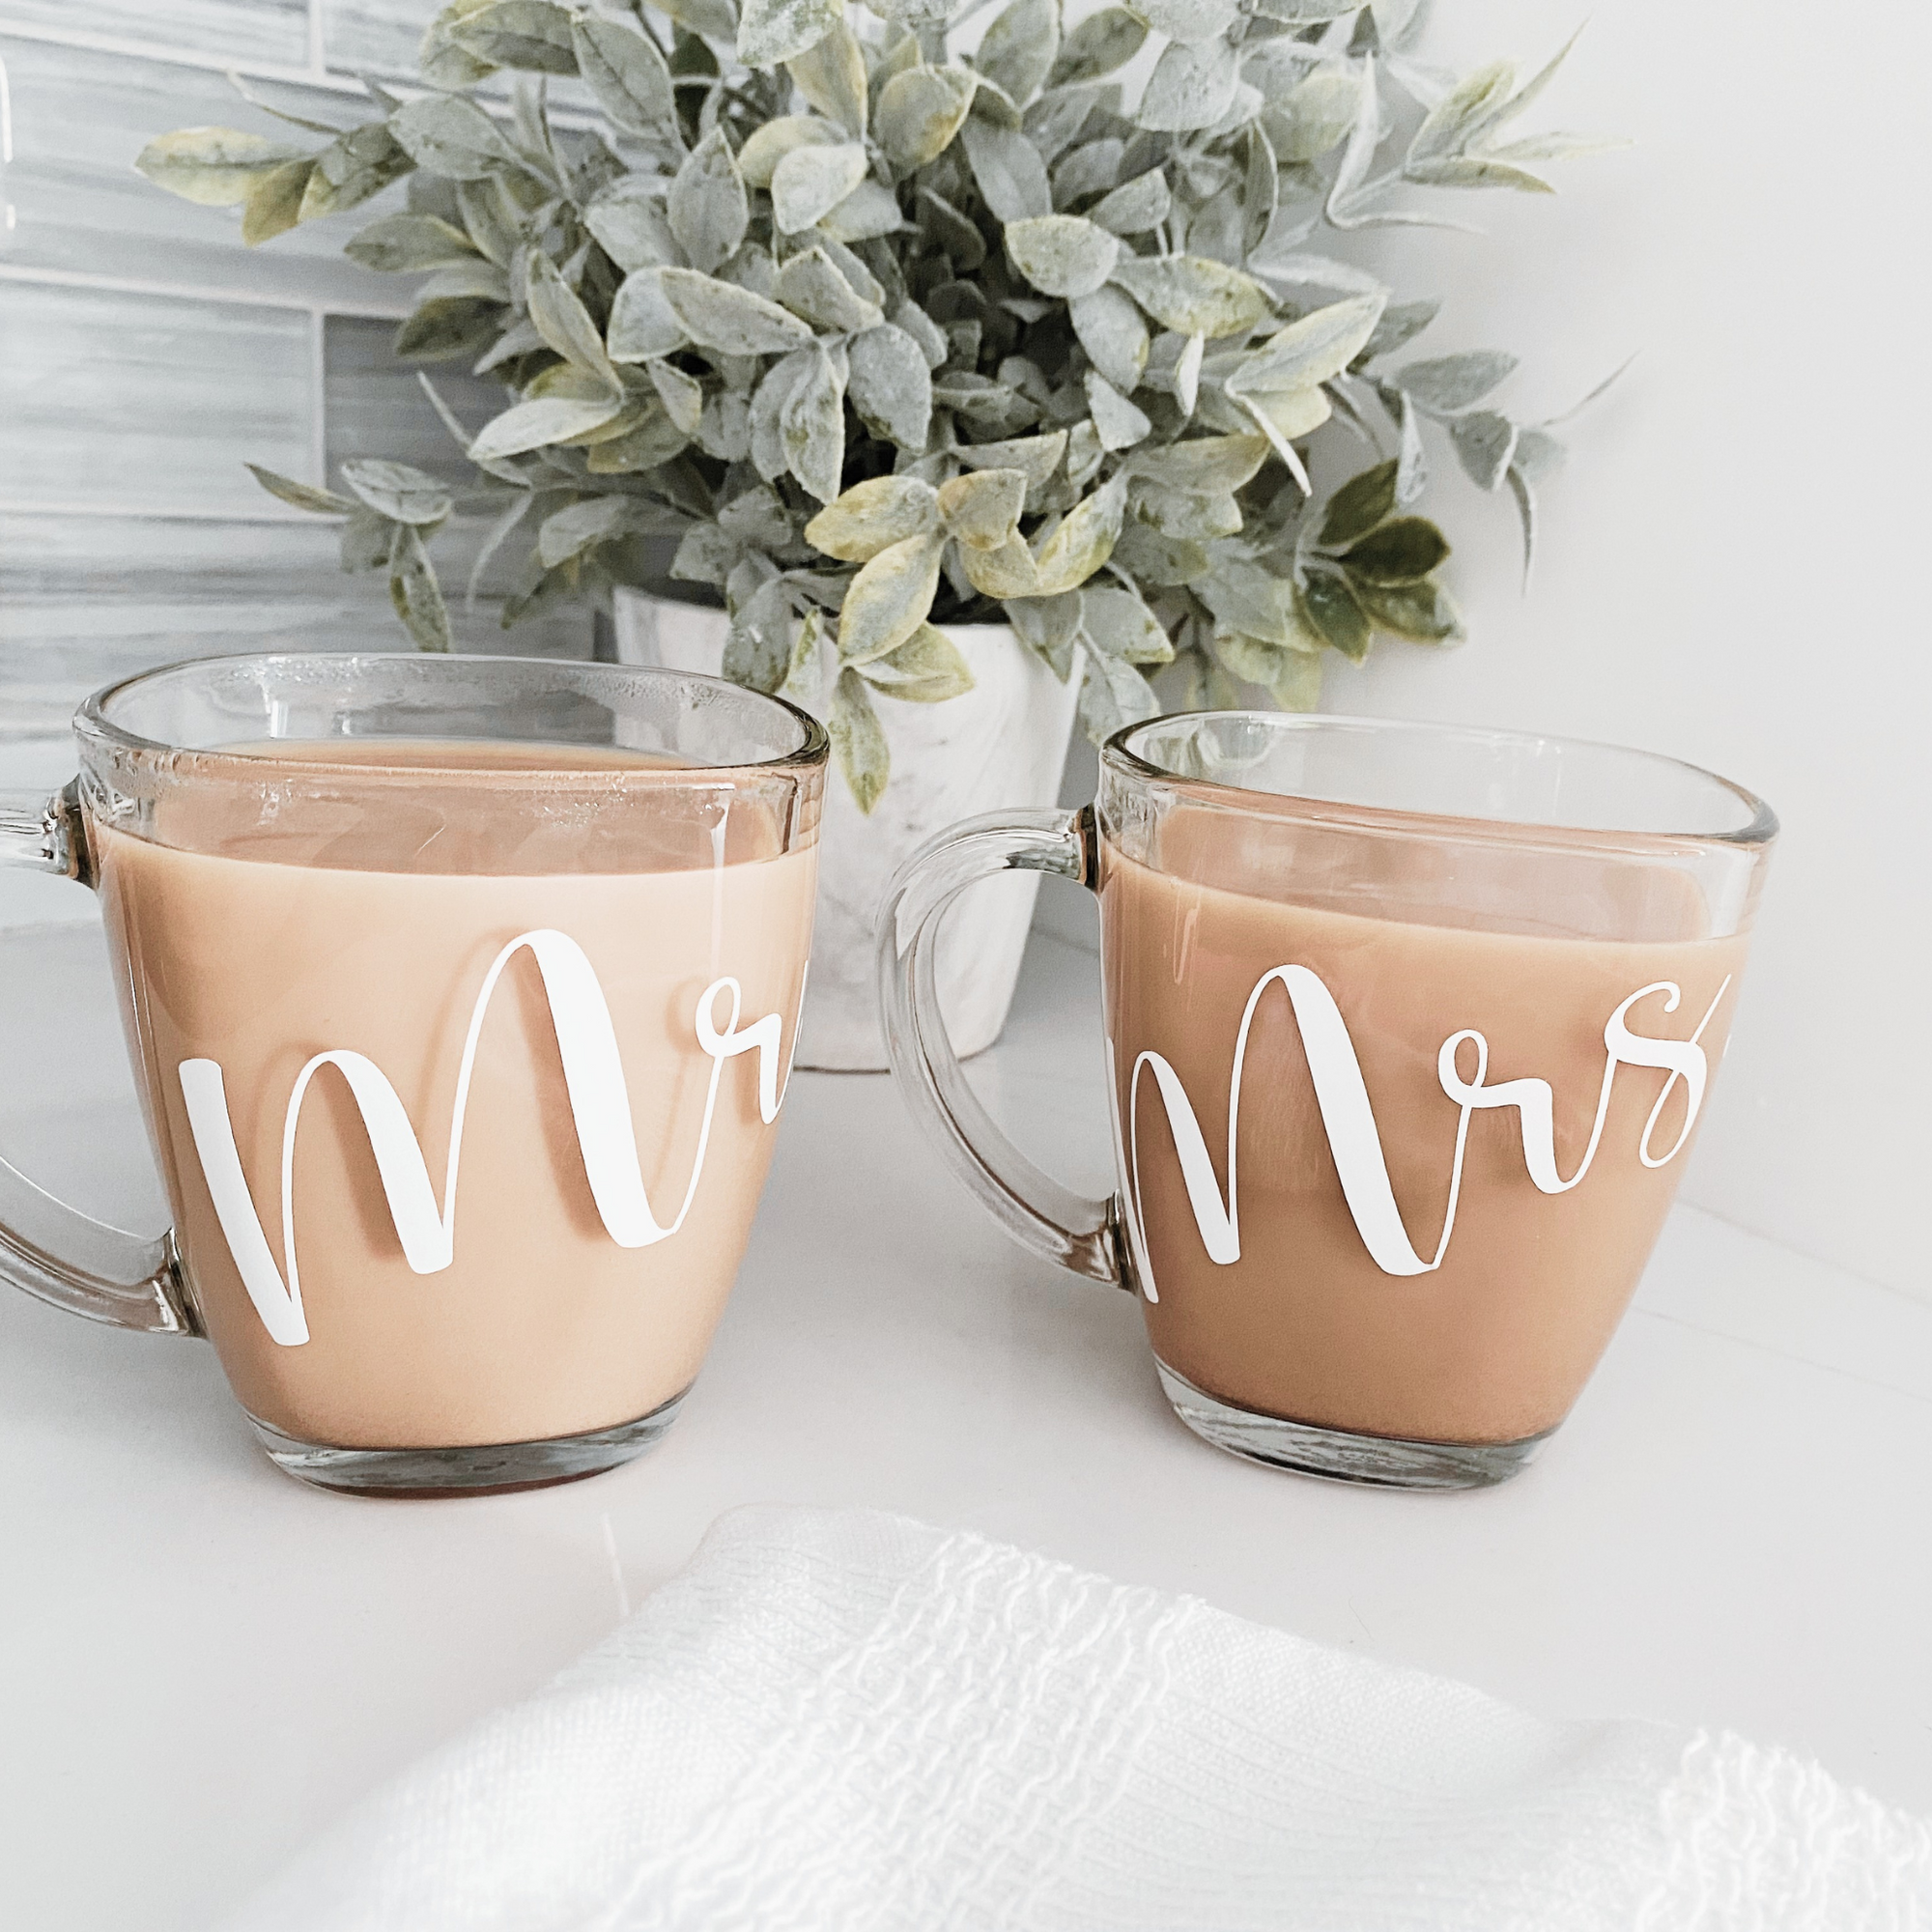 Double Wall Glass Mugs With Caffeine Monogram (pair)